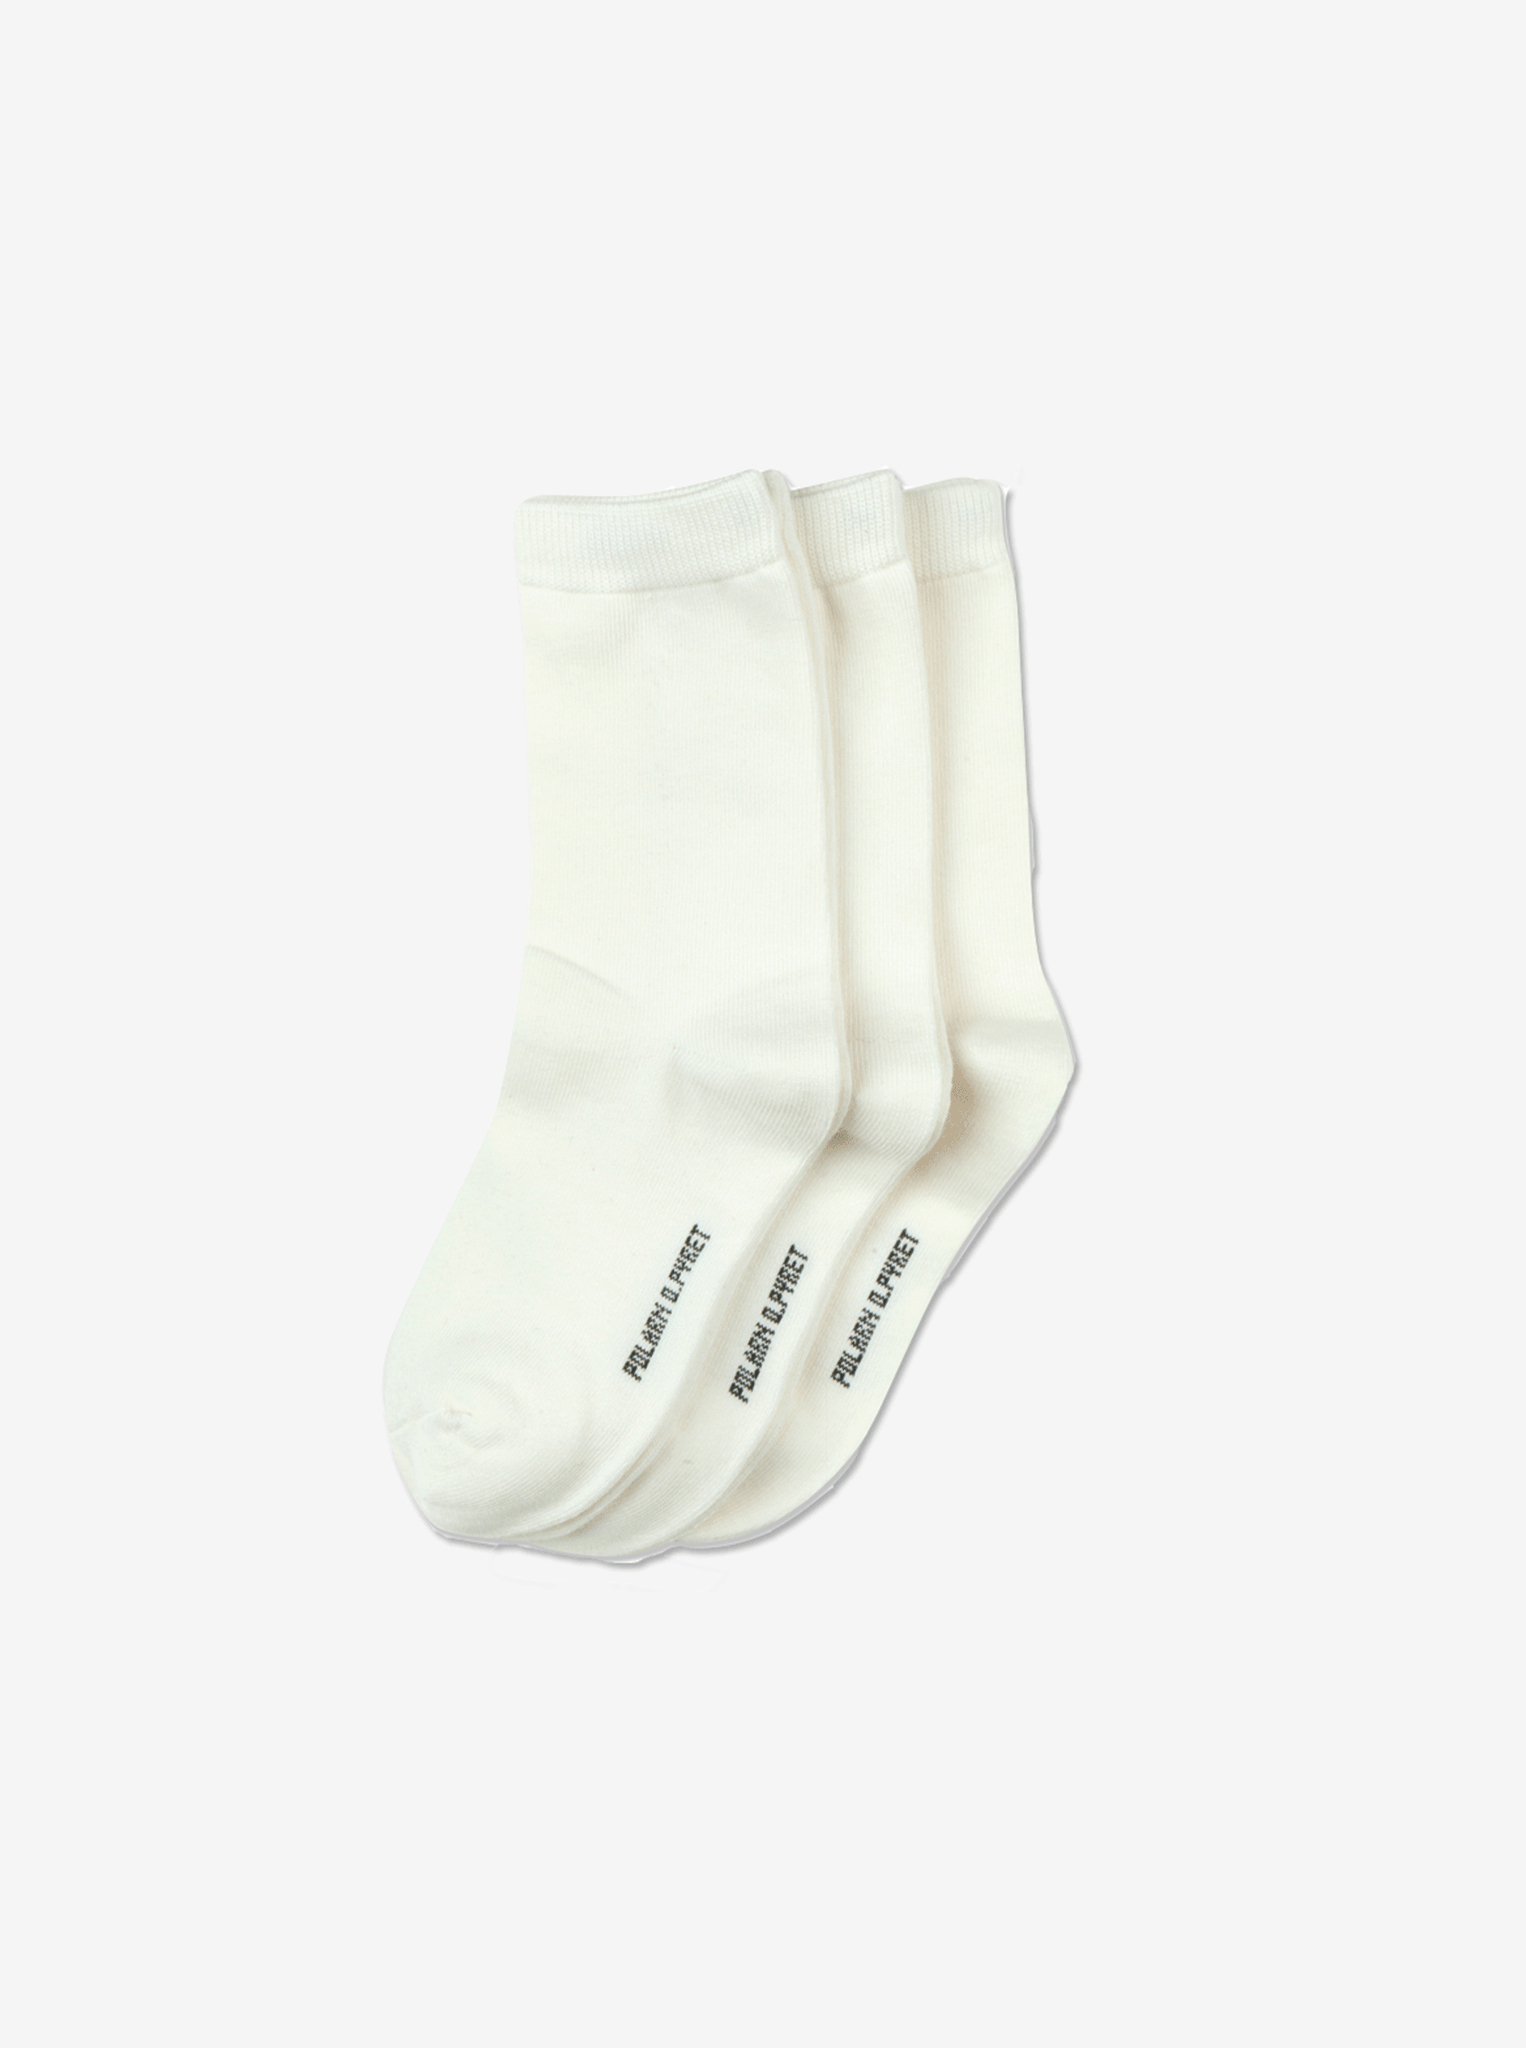 3 Pack Kids Socks white, organic cotton comfortable polarn o. pyret